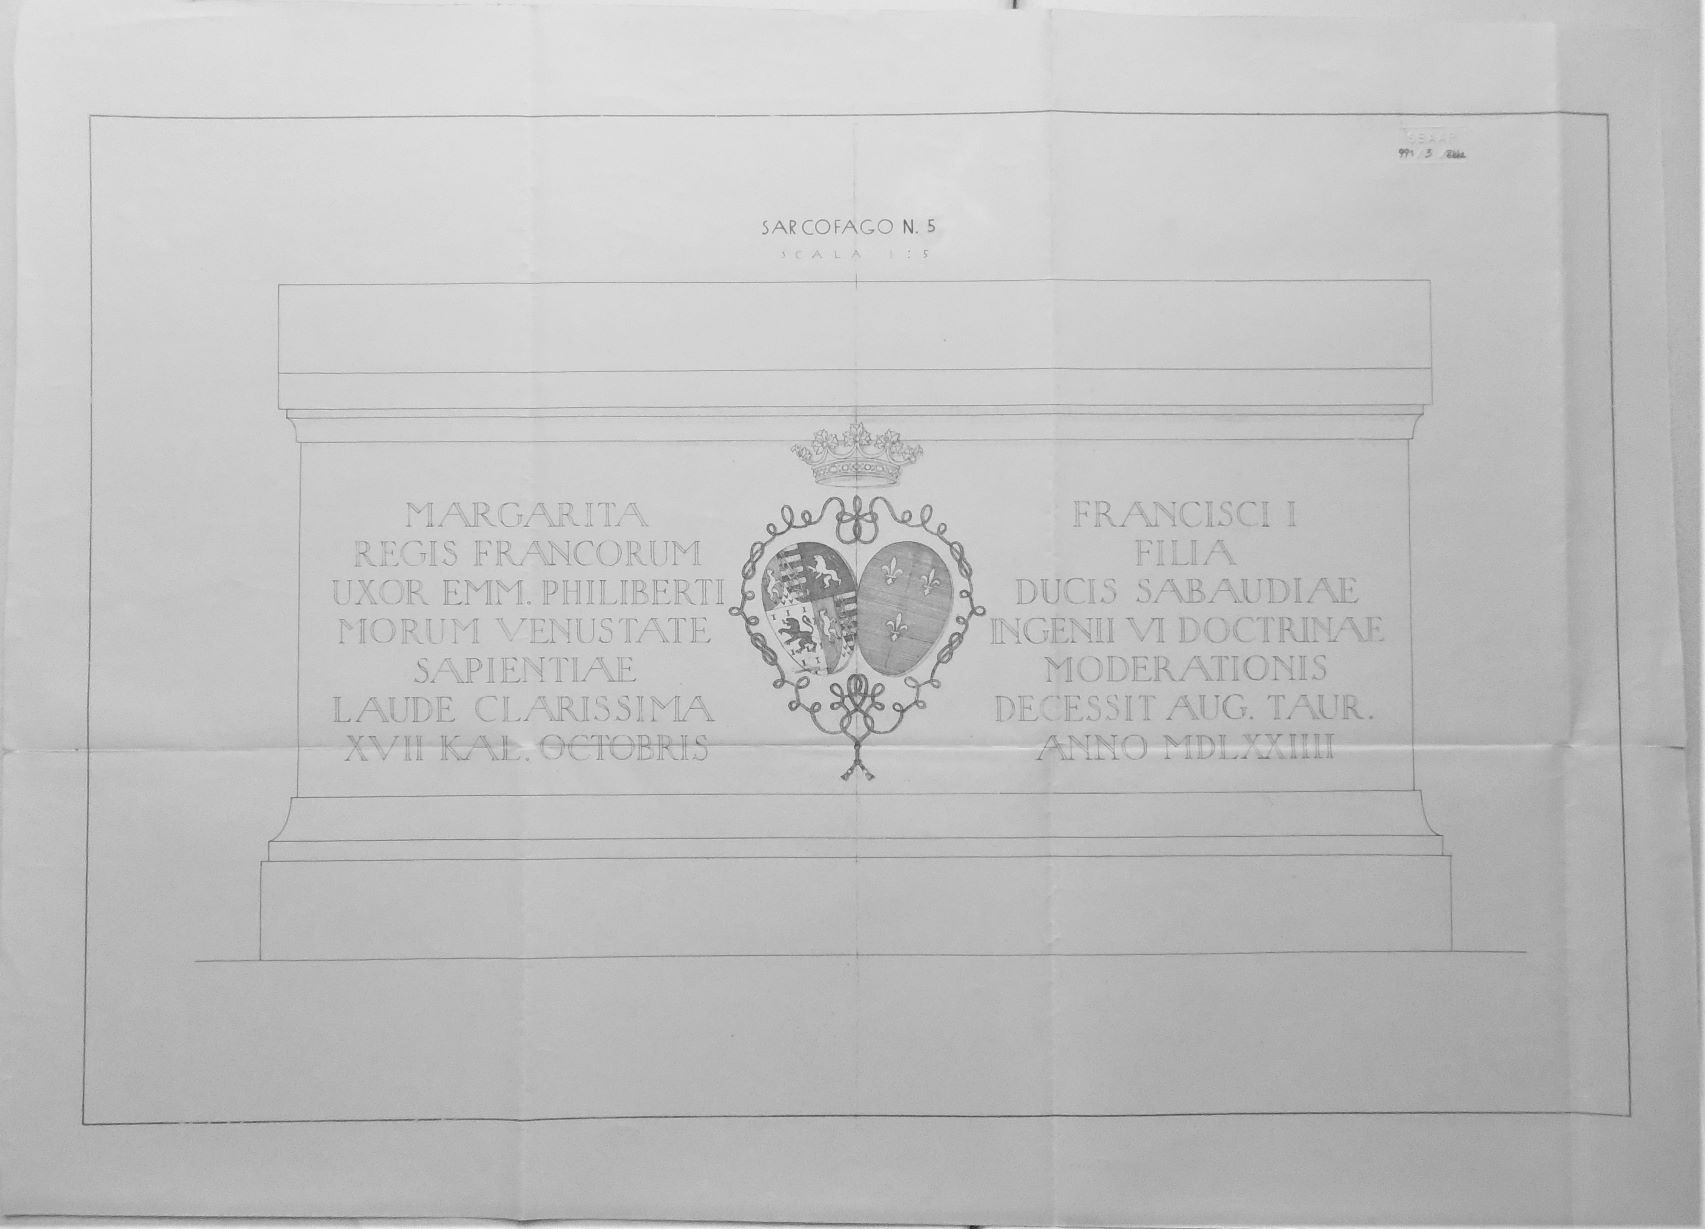 Sacra di San Michele/ Sarcofago n. 5 - scala 1:5, Sacra di San Michele a Sant'Ambrogio di Susa (TO) - Sarcofago n. 5 - scala 1:5 (disegno) di Chierici Umberto (cerchia) (secondo quarto sec. XX)